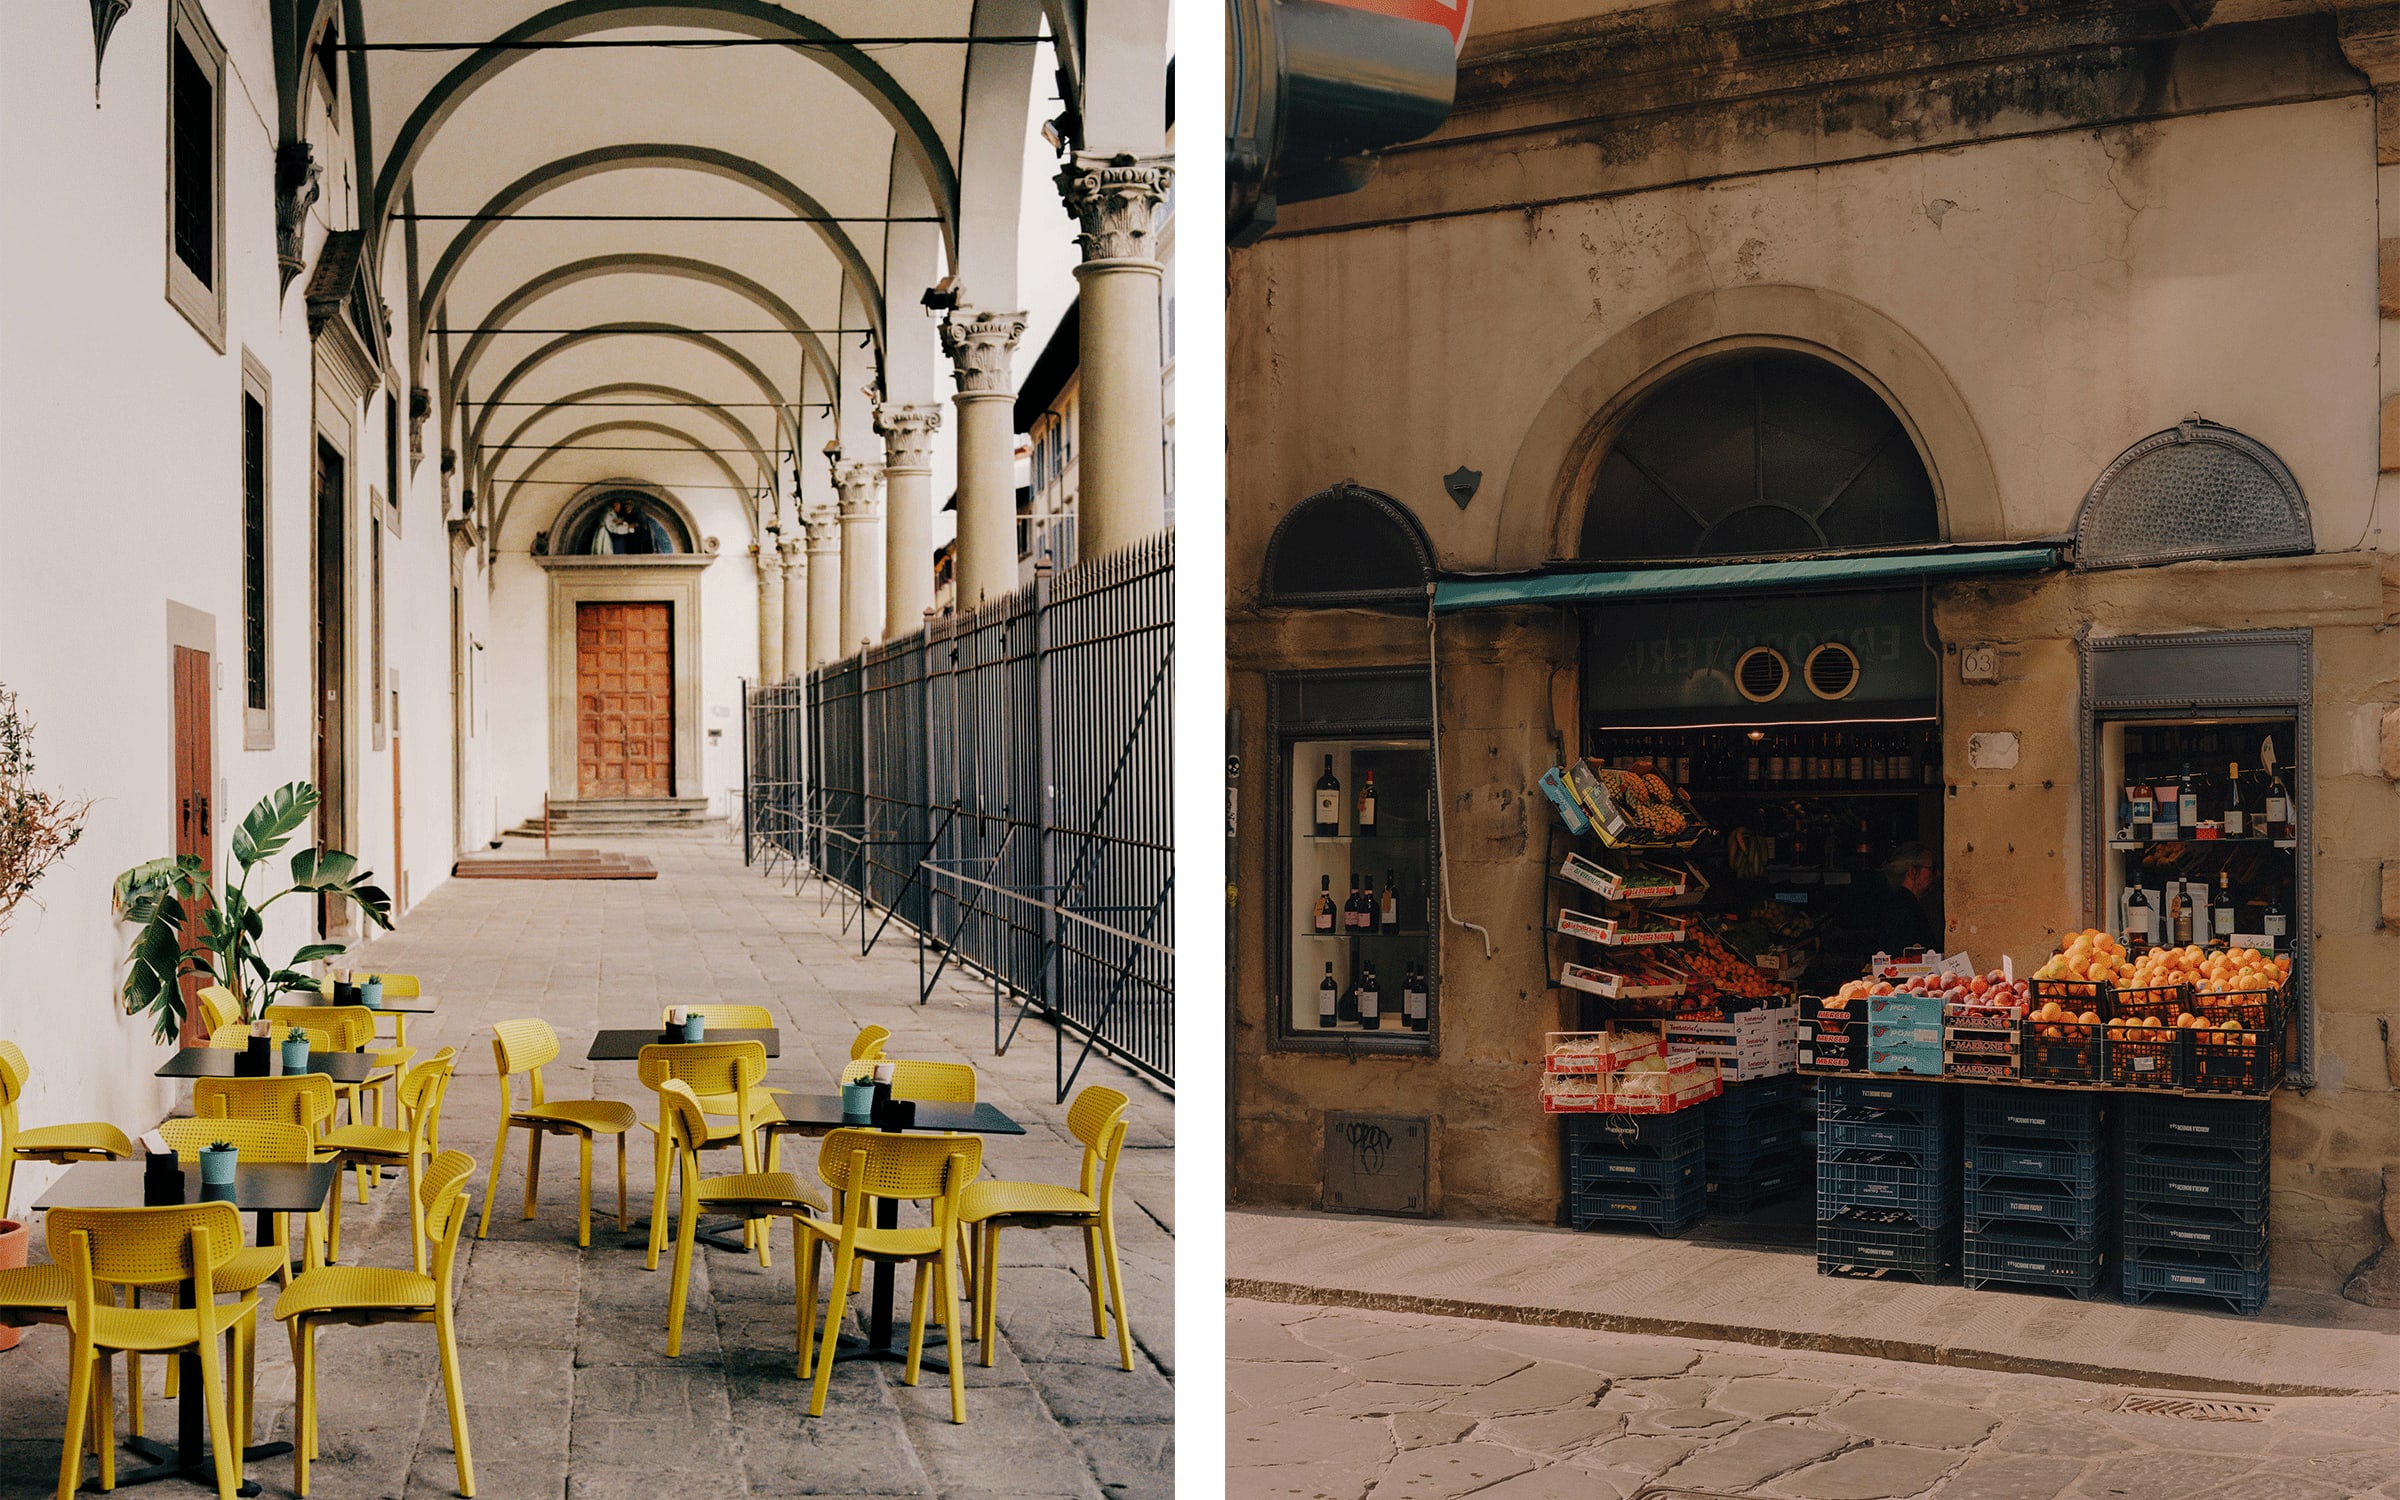 Left: Museo Novecento. Right: Florence street scene. Photographs by Julius Hirtzberger for Art Basel.